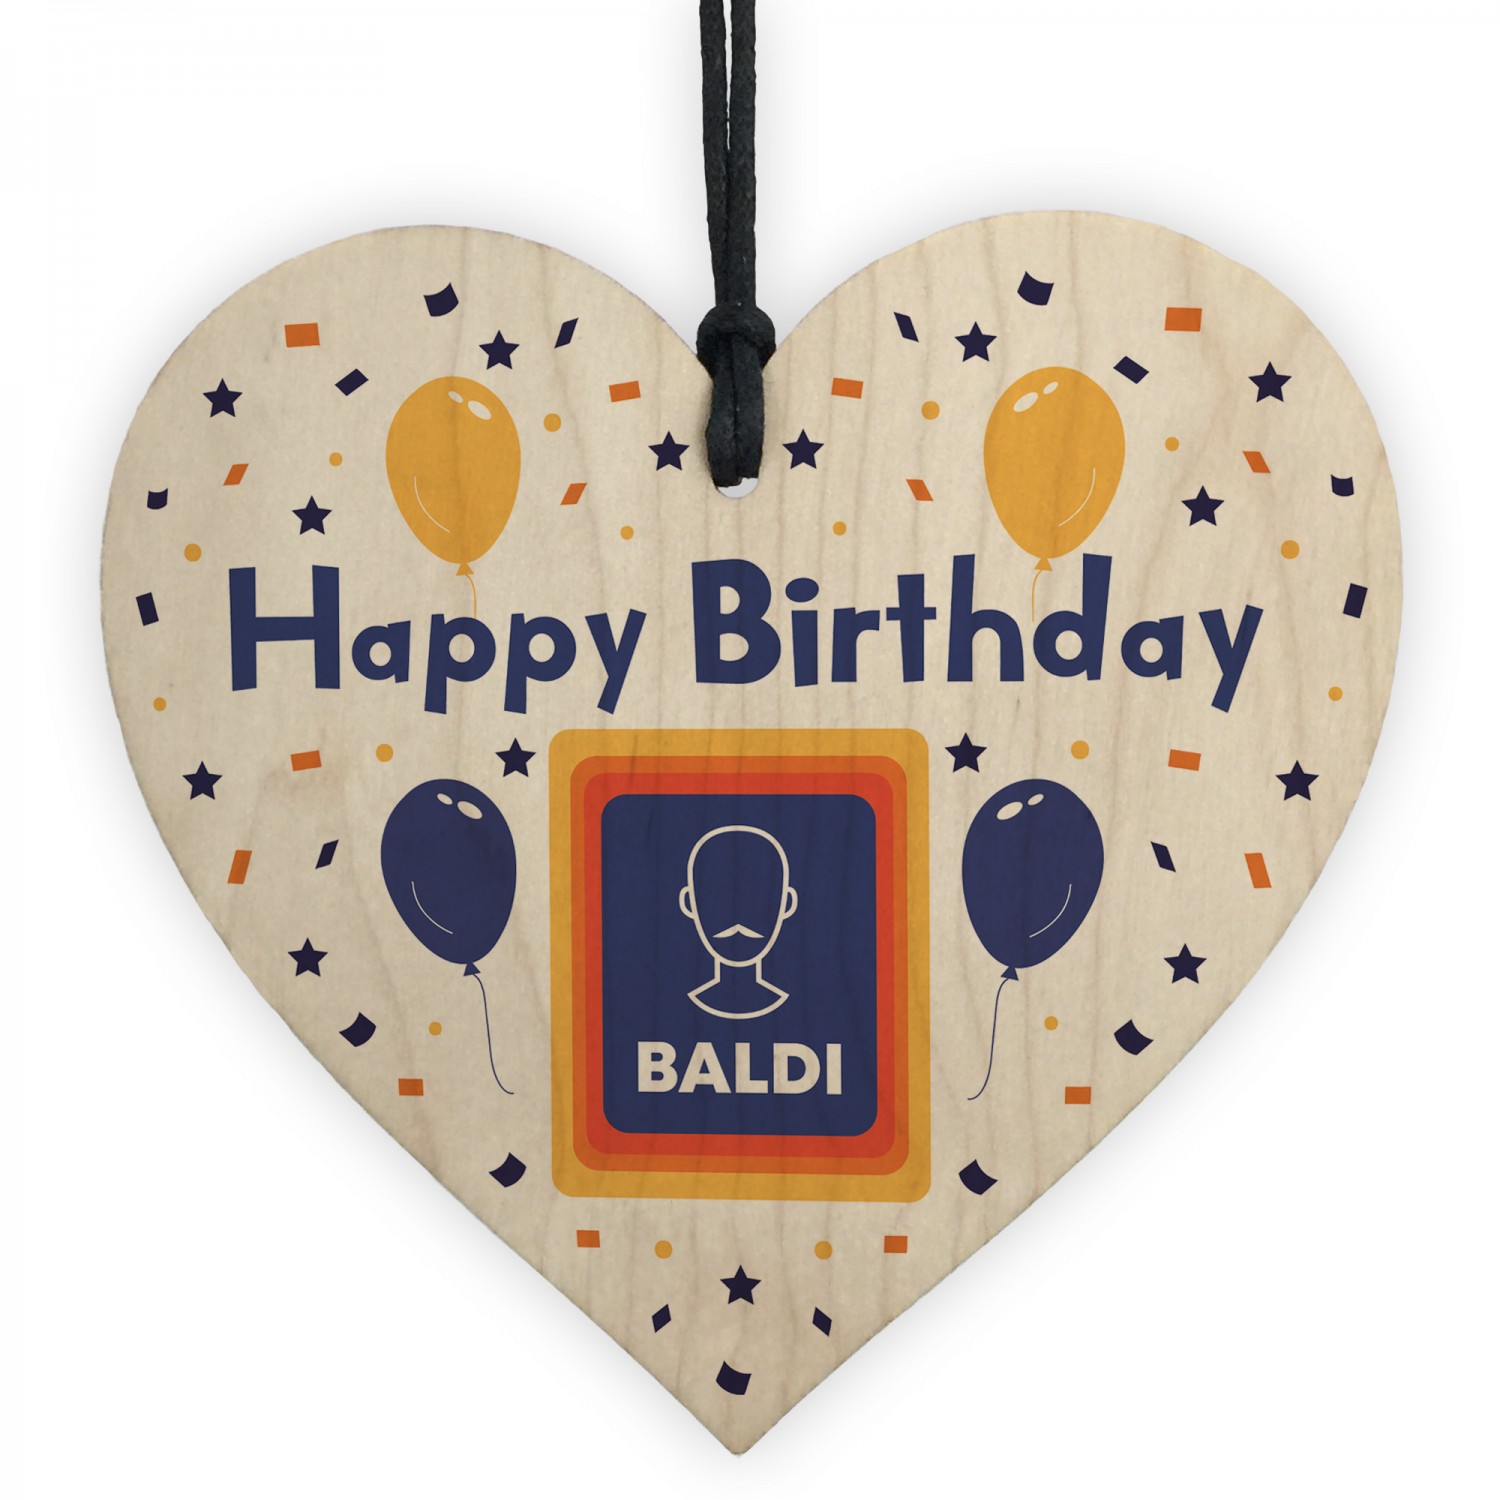 Old Lives Matter - Funny Birthday Gifts for Men - Retirement Gag Gift for  Dad, G | eBay